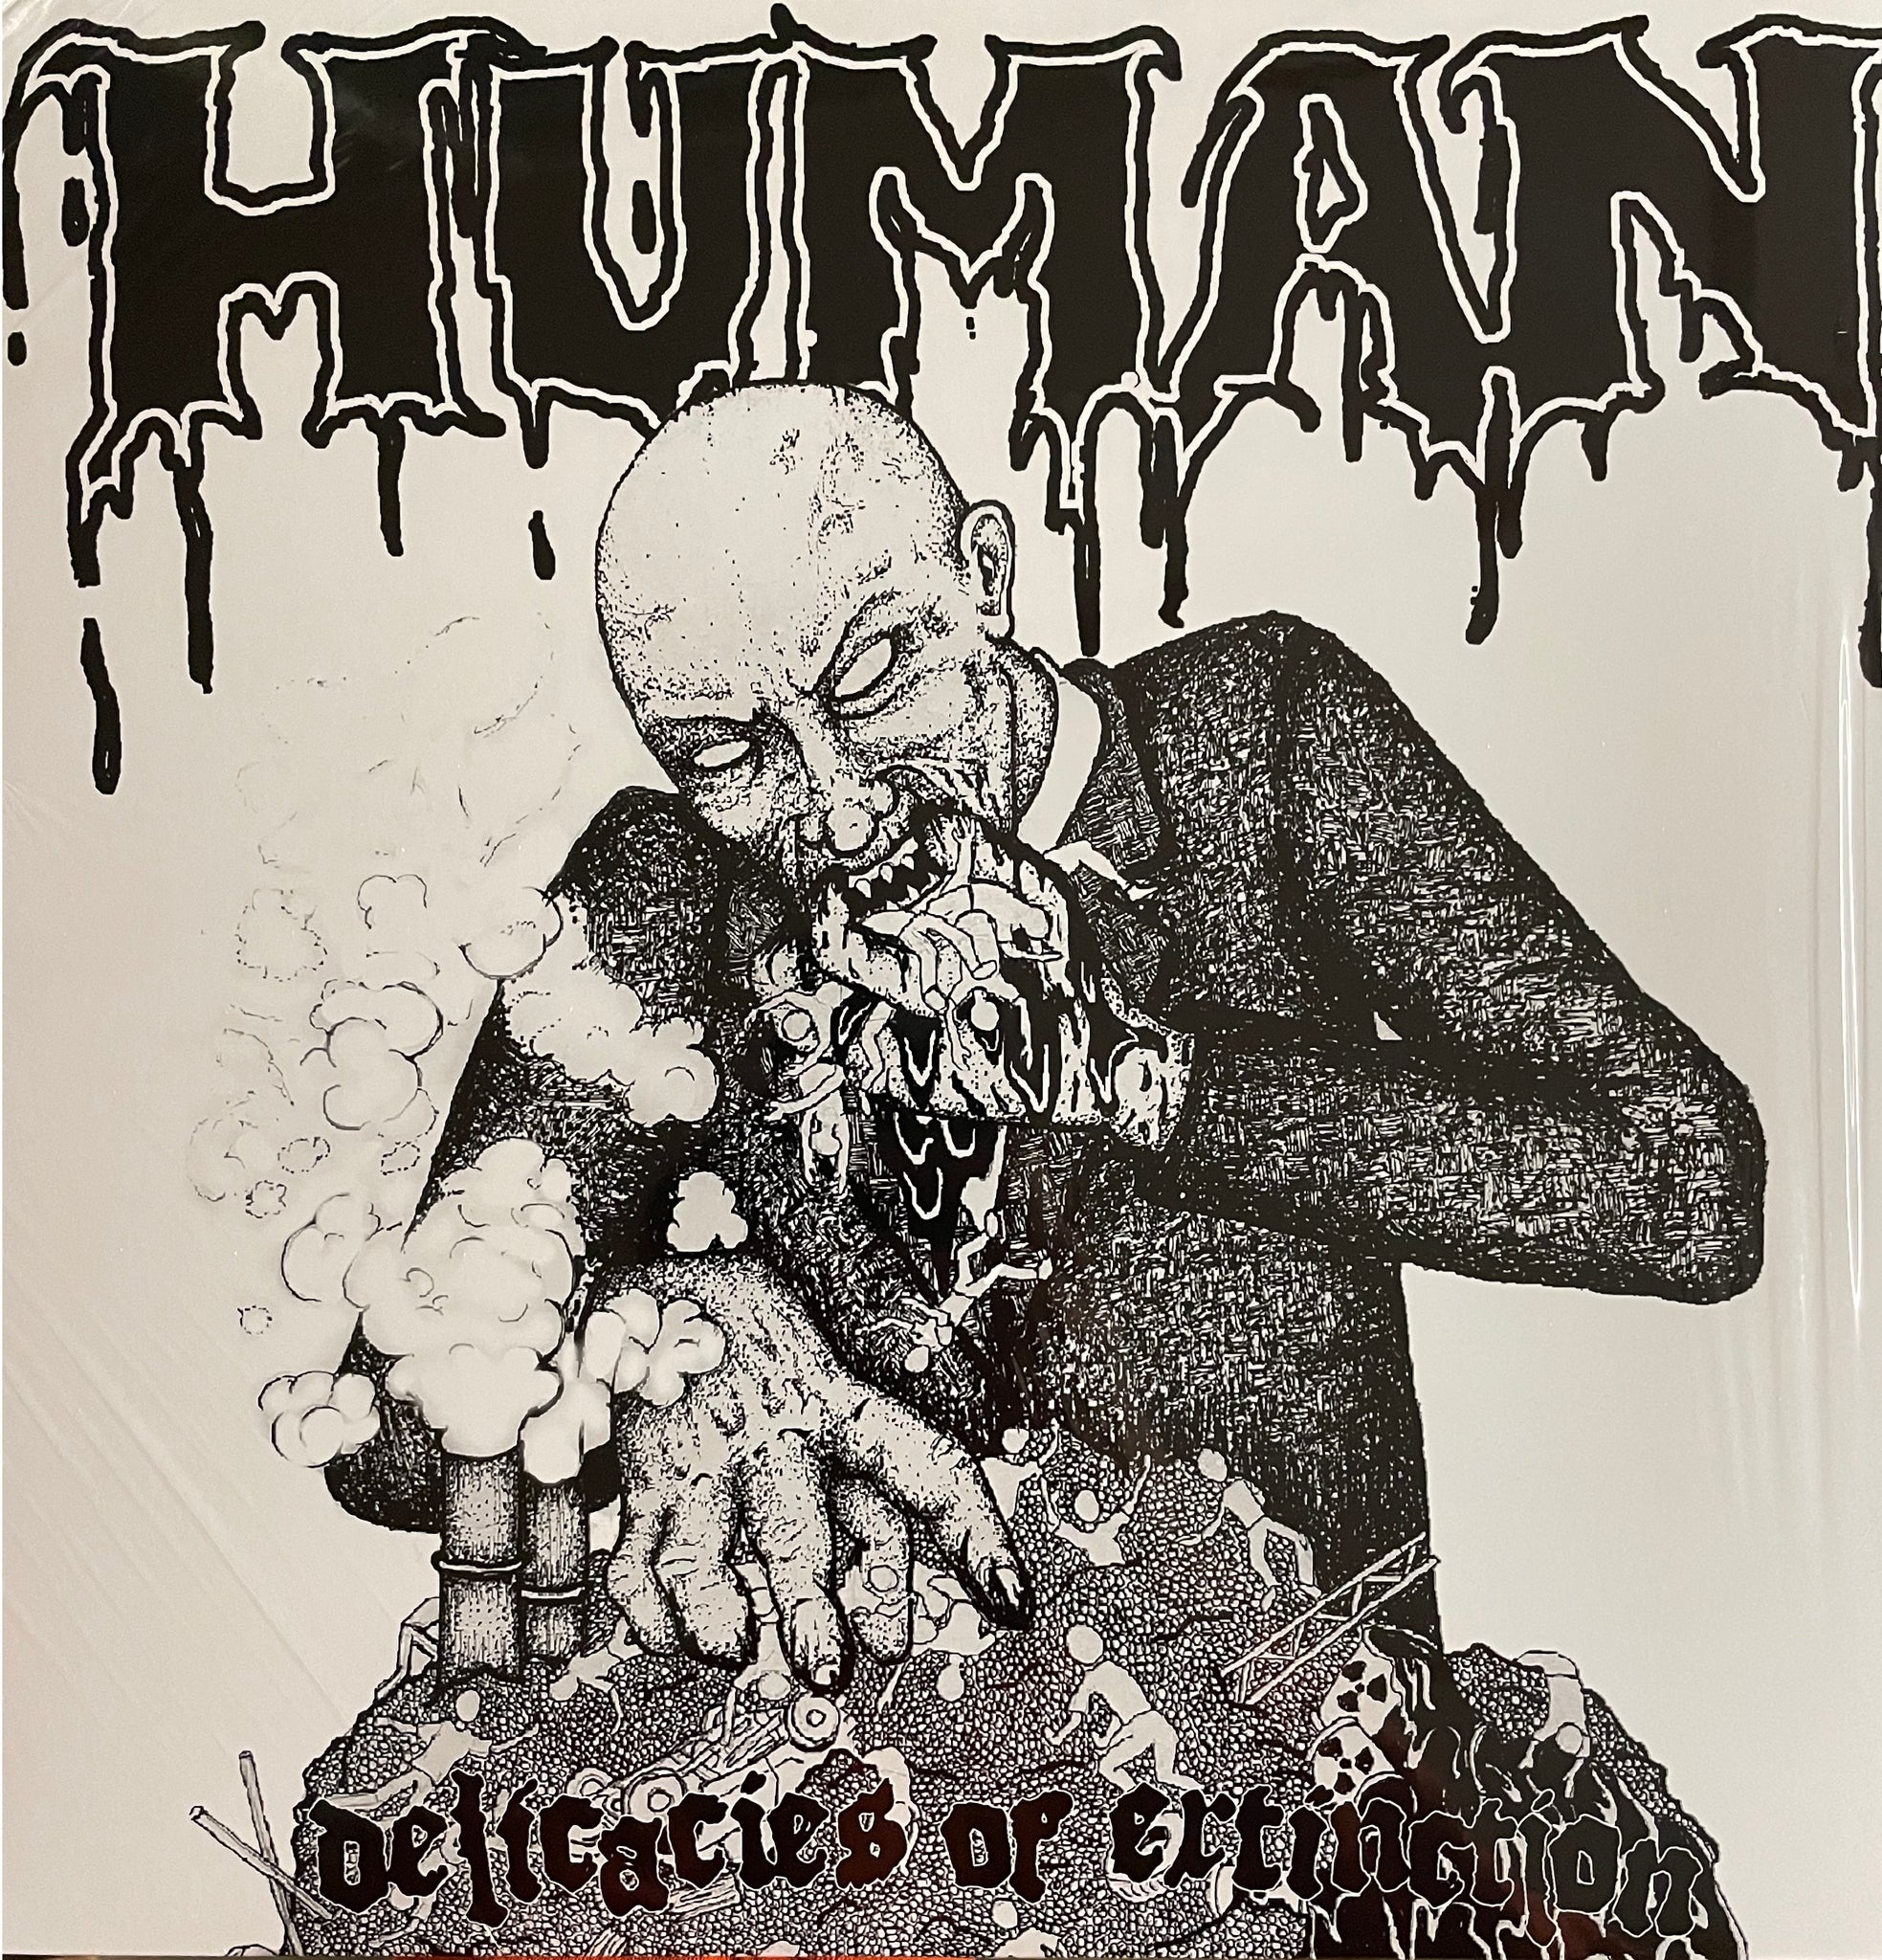 Human "Delicacies of Extinction" LP